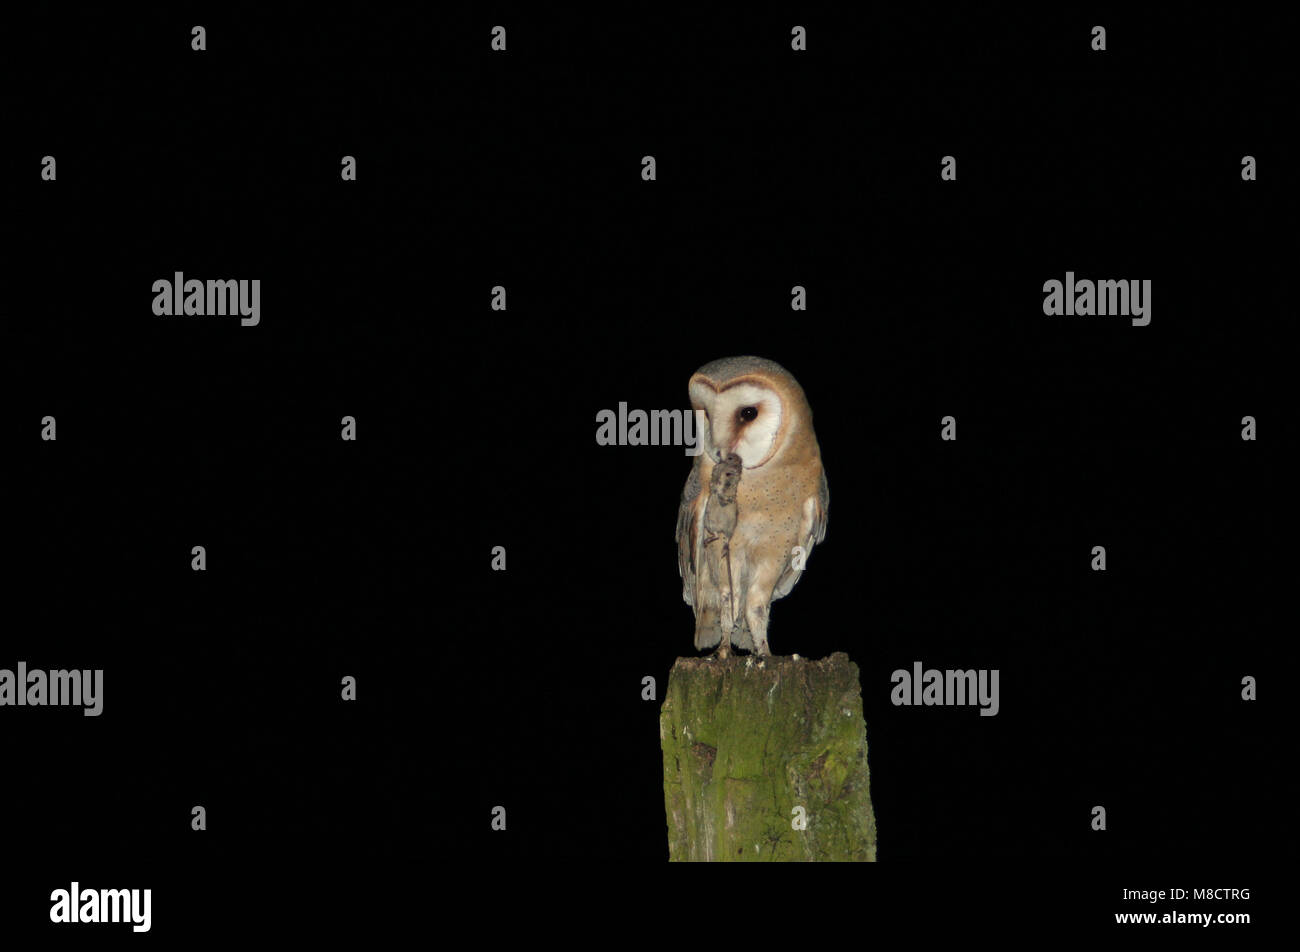 Kerkuil op een stronk; Dark Barn Owl perched on a trunc Stock Photo